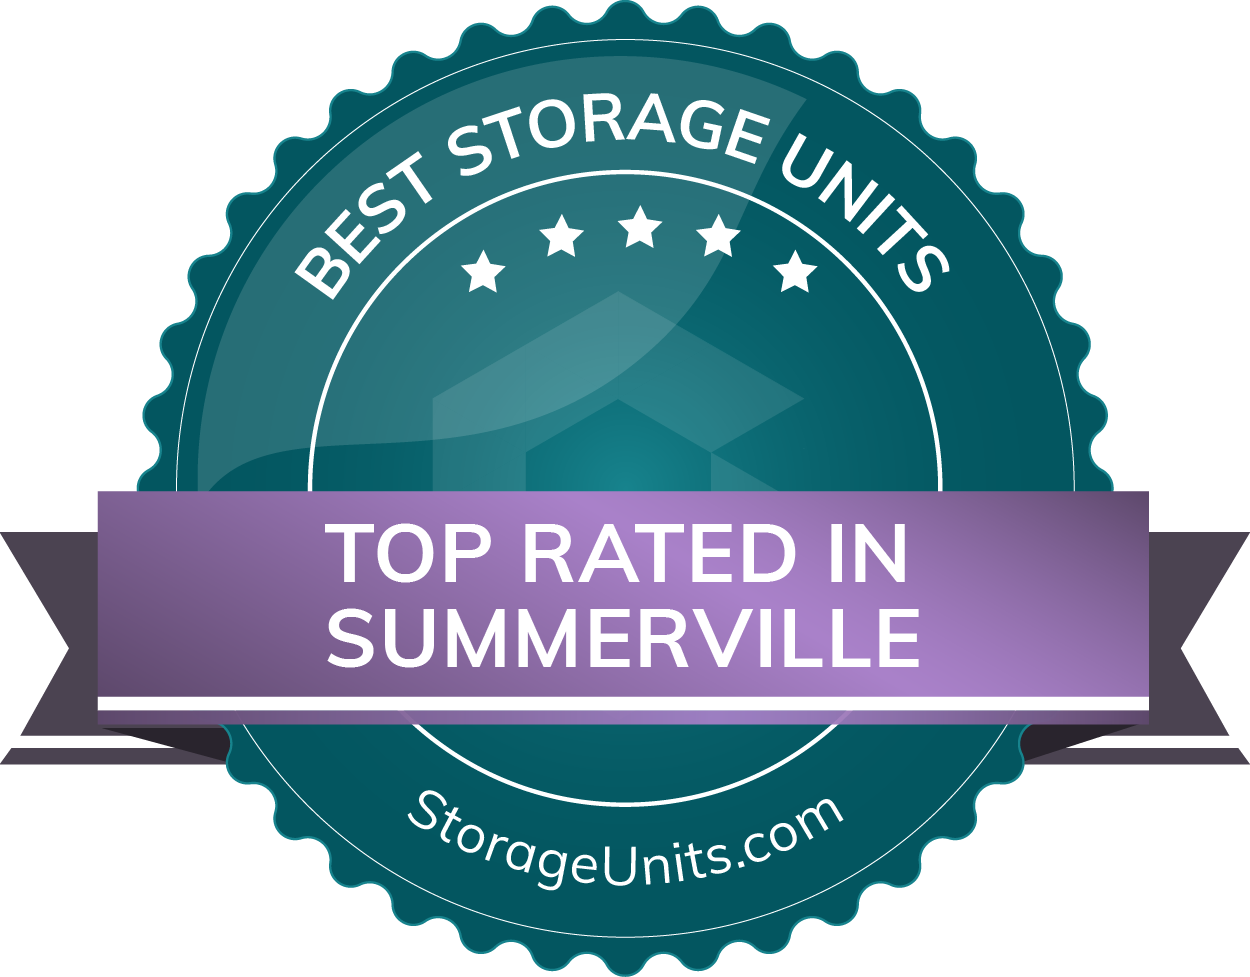 Best Self Storage Units in Summerville, South Carolina of 2022